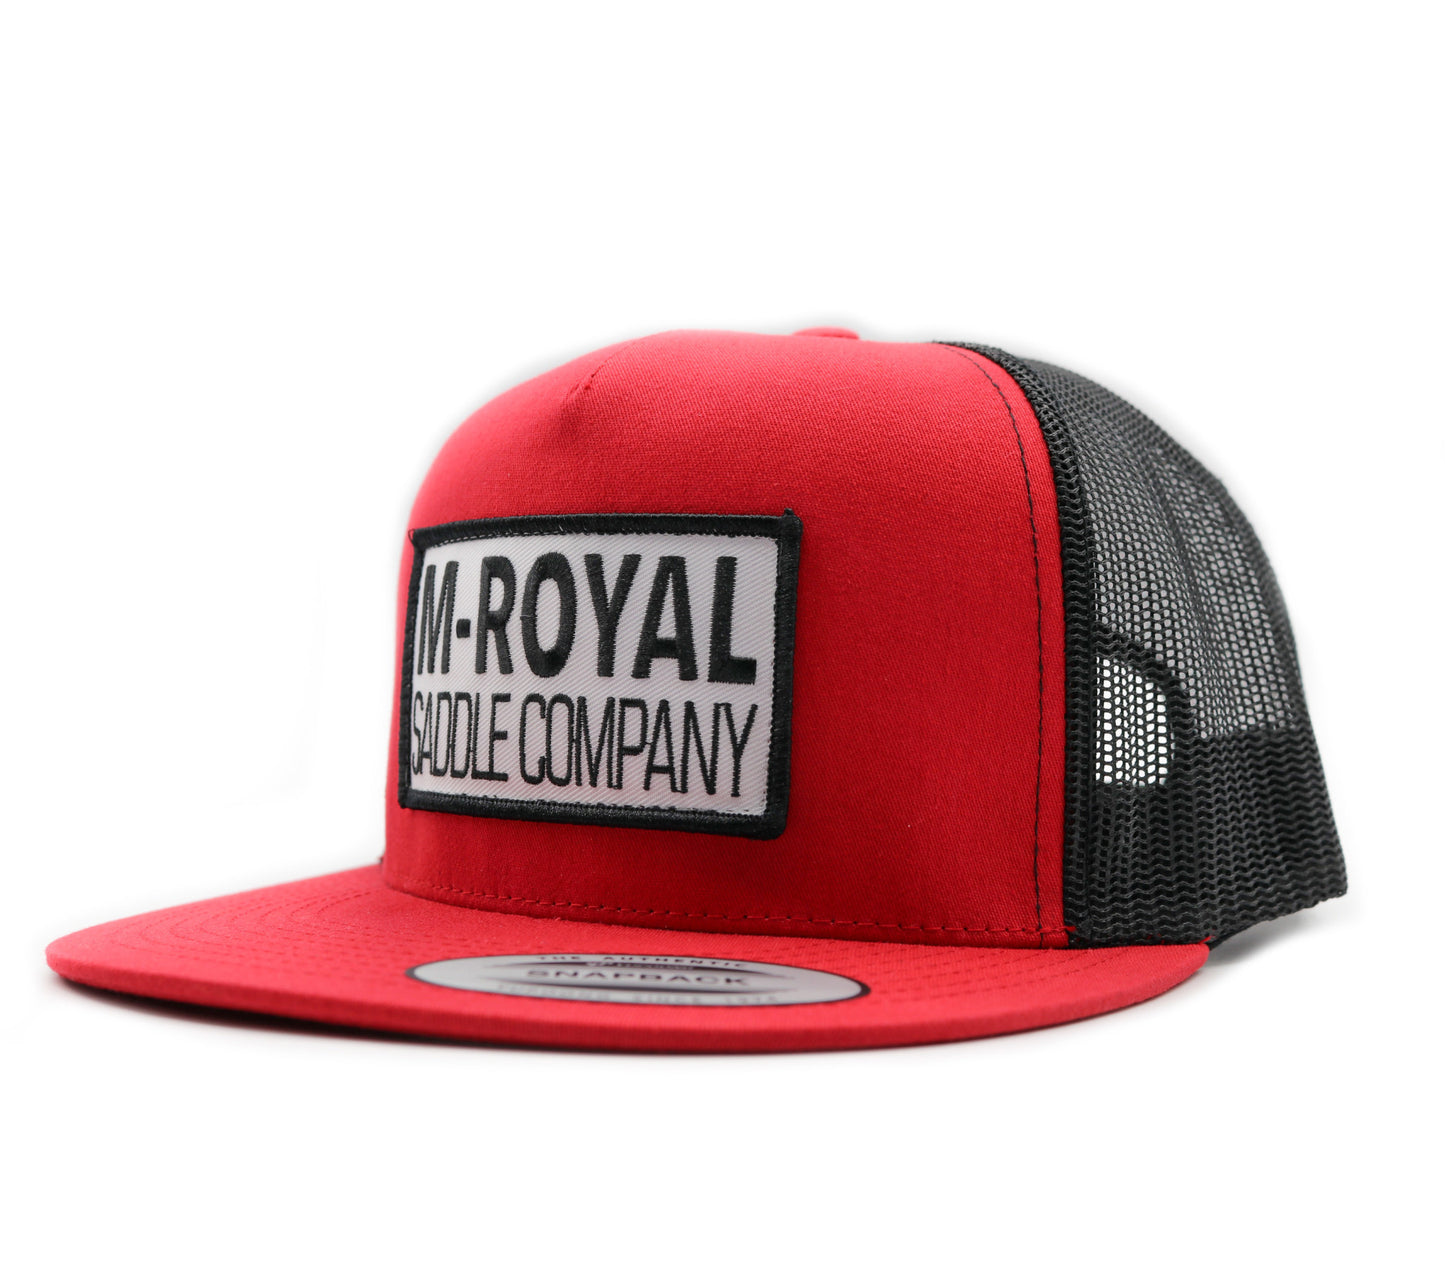 M-Royal Saddle Company Red Hat Cachucha